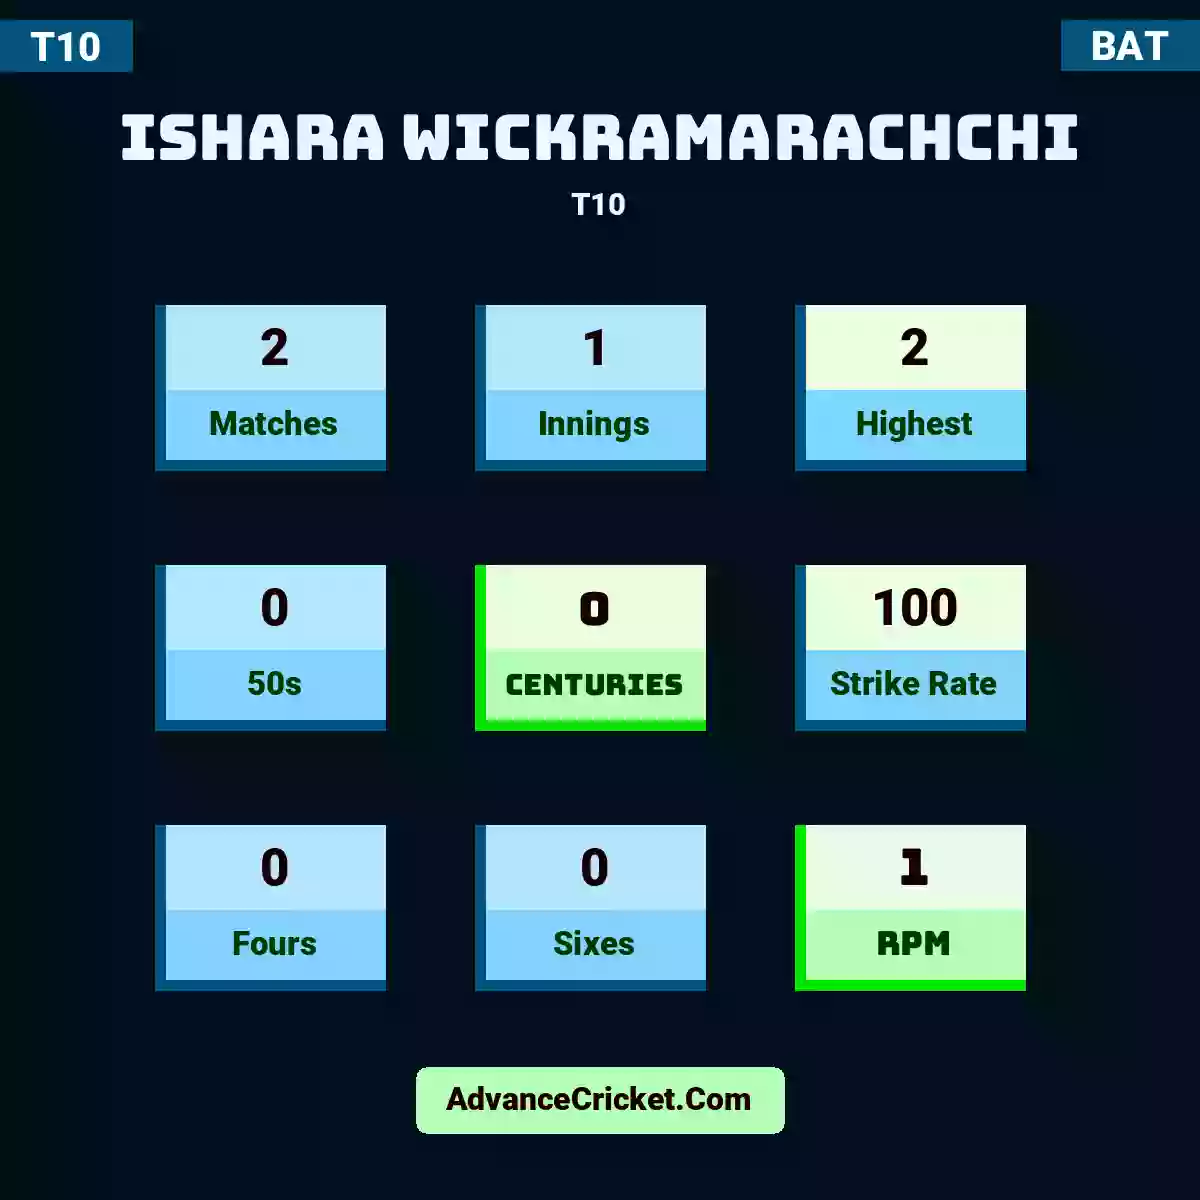 Ishara Wickramarachchi T10 , Ishara Wickramarachchi played 2 matches, scored 2 runs as highest, 0 half-centuries, and 0 centuries, with a strike rate of 100. I.Wickramarachchi hit 0 fours and 0 sixes, with an RPM of 1.